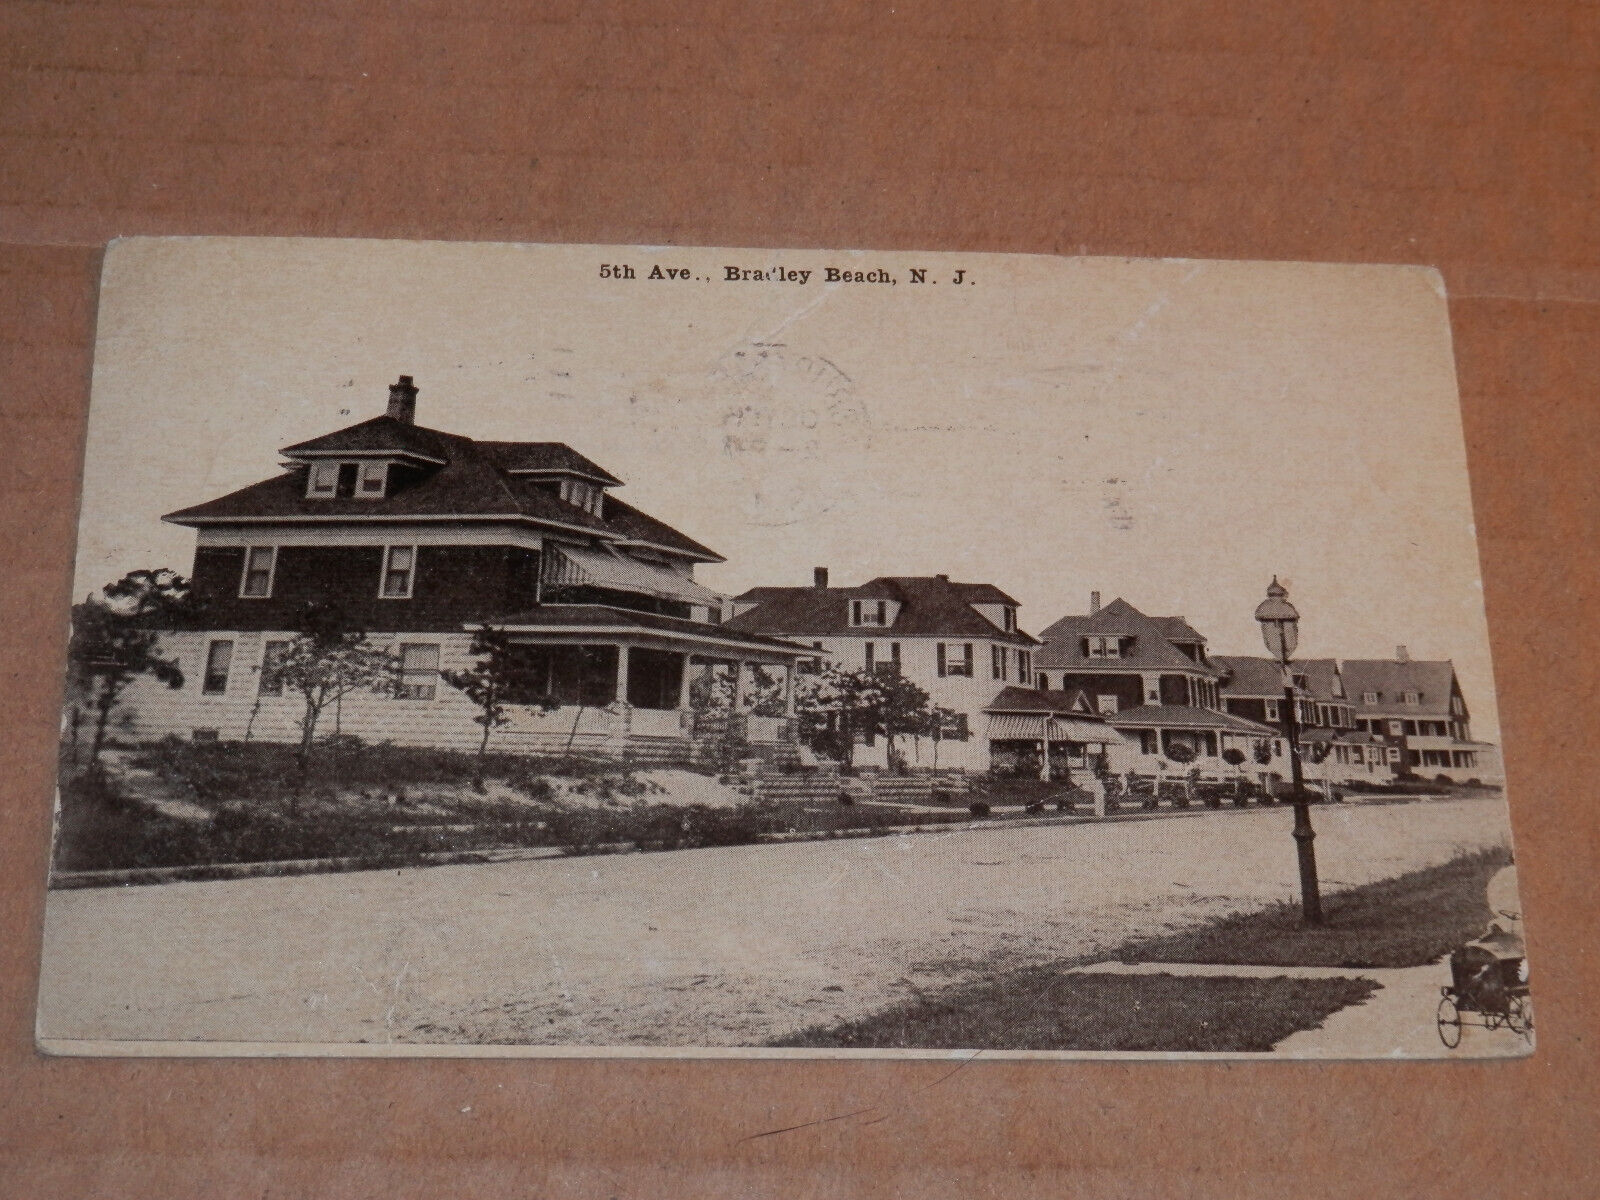 BRADLEY BEACH NJ - 1910 POSTCARD - 5TH AVENUE